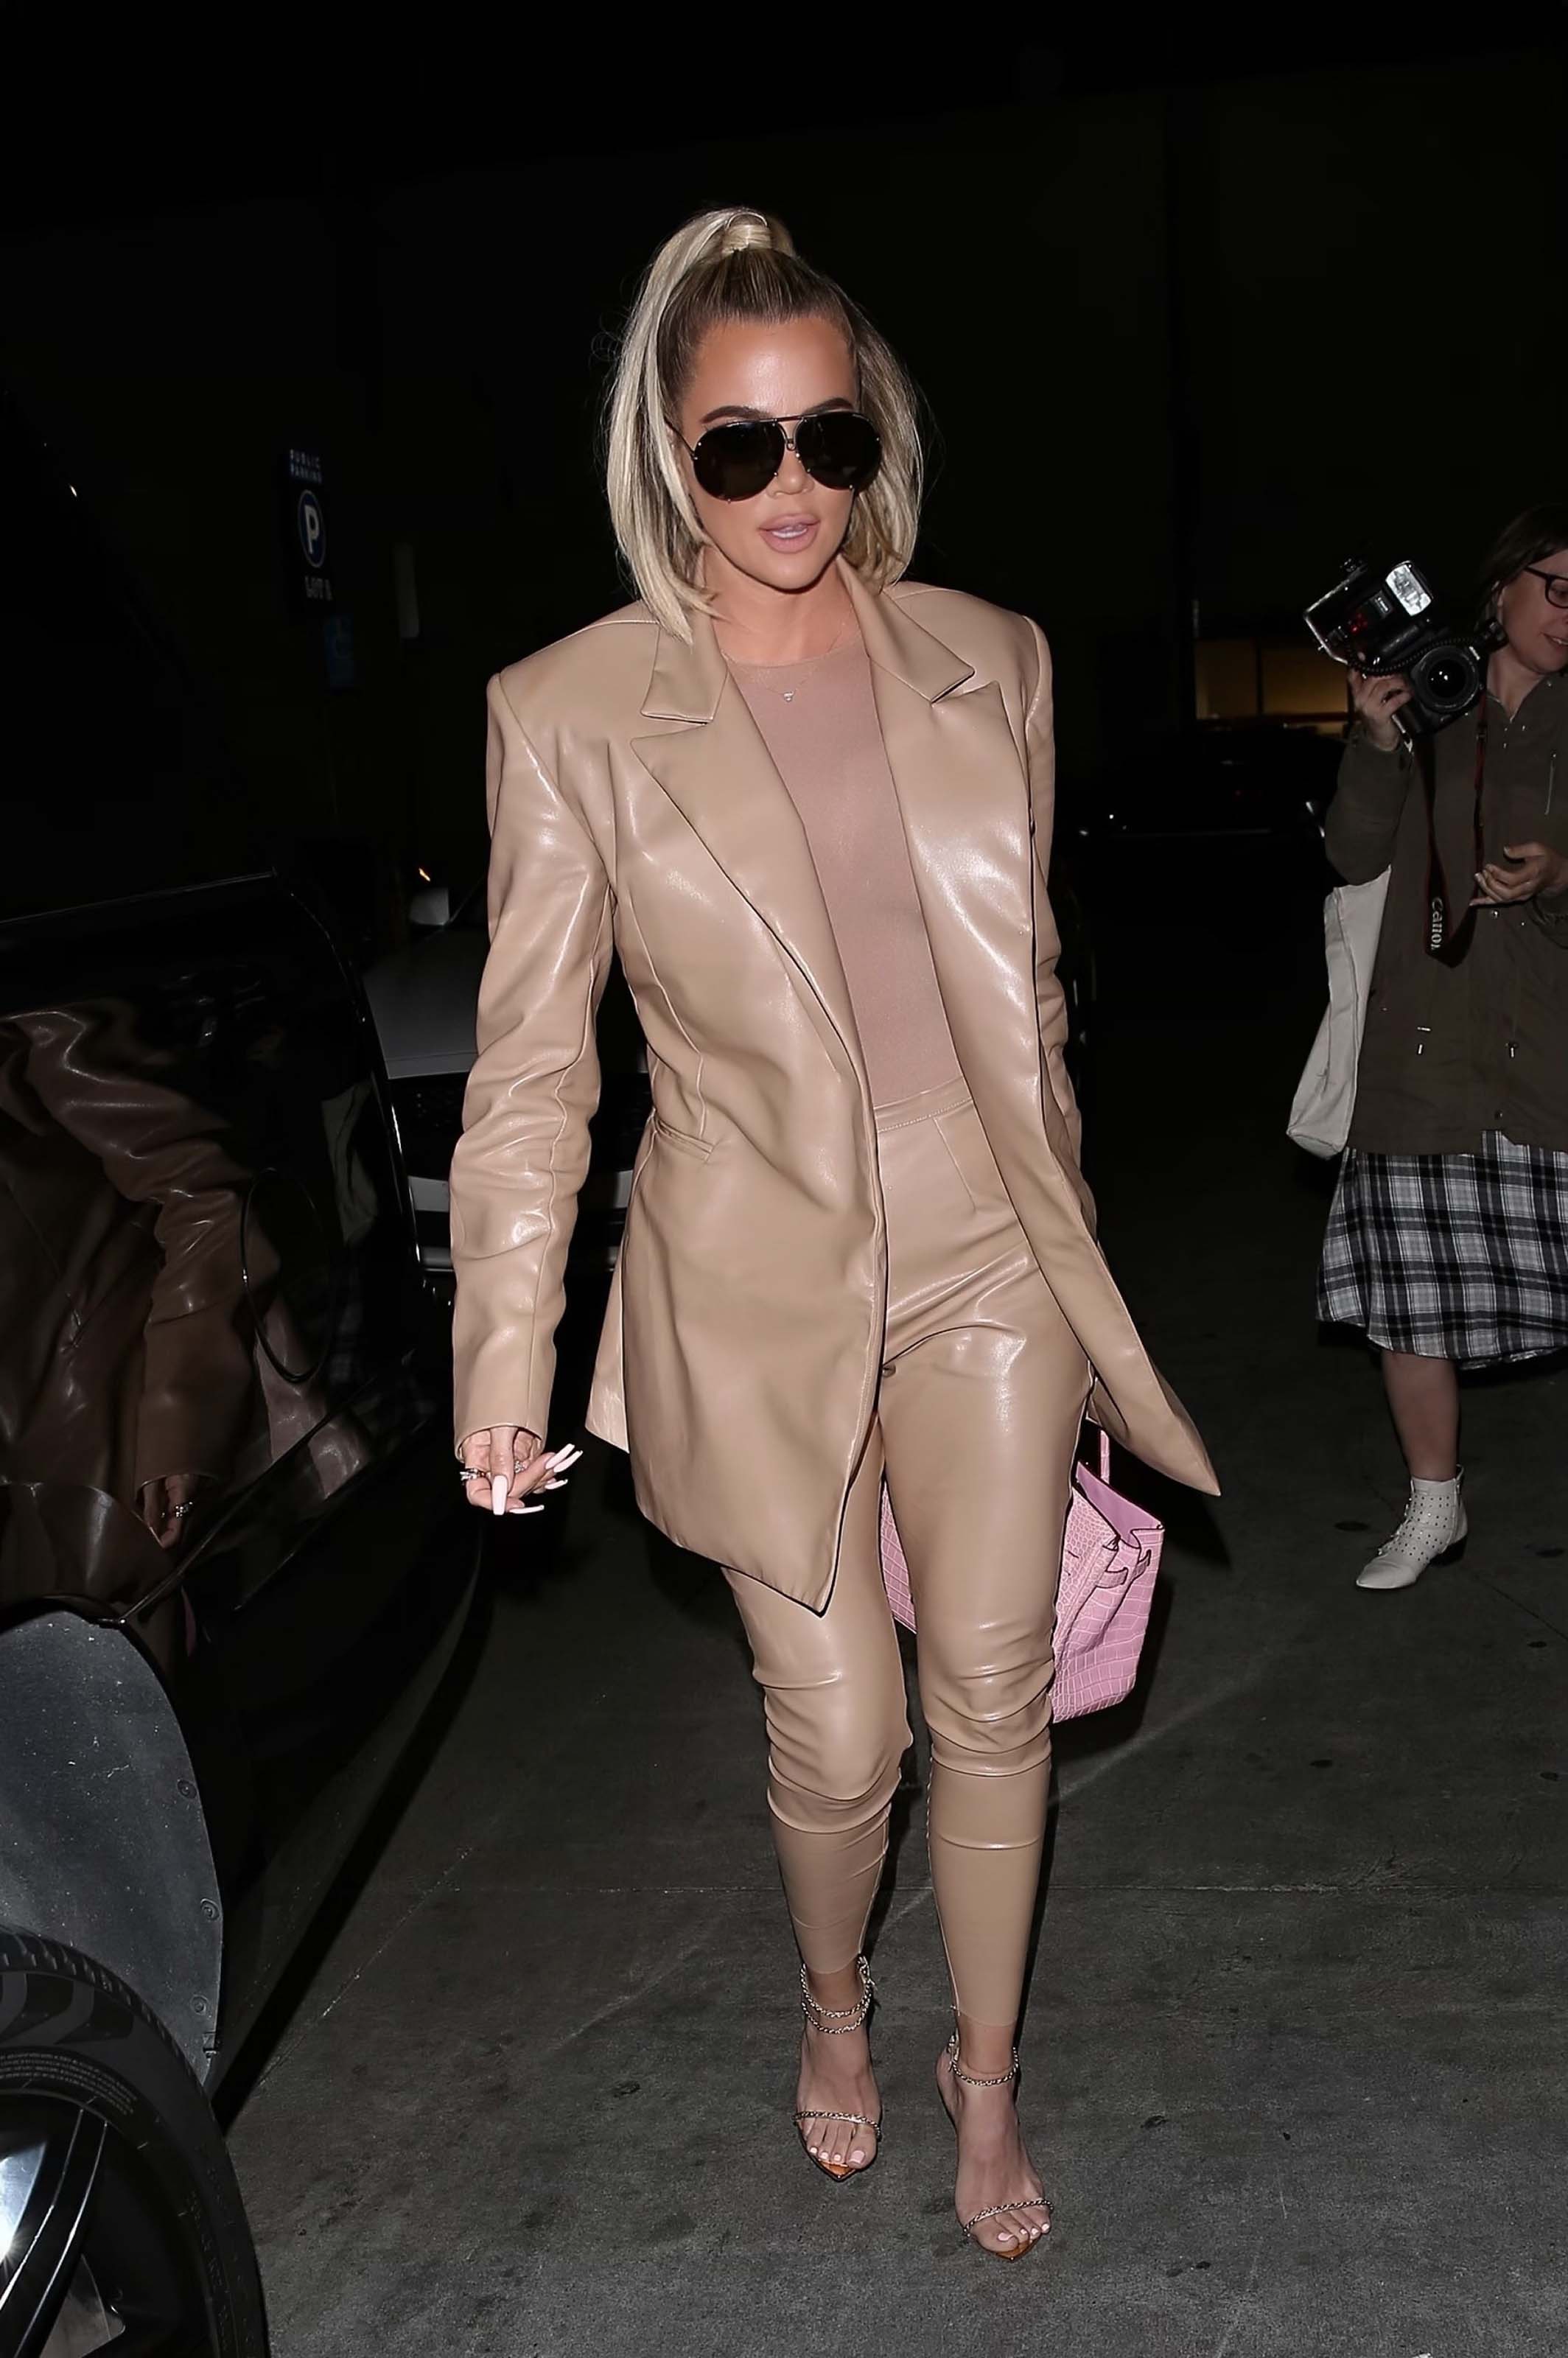 Khloe Kardashian arrives at Carousel restaurant